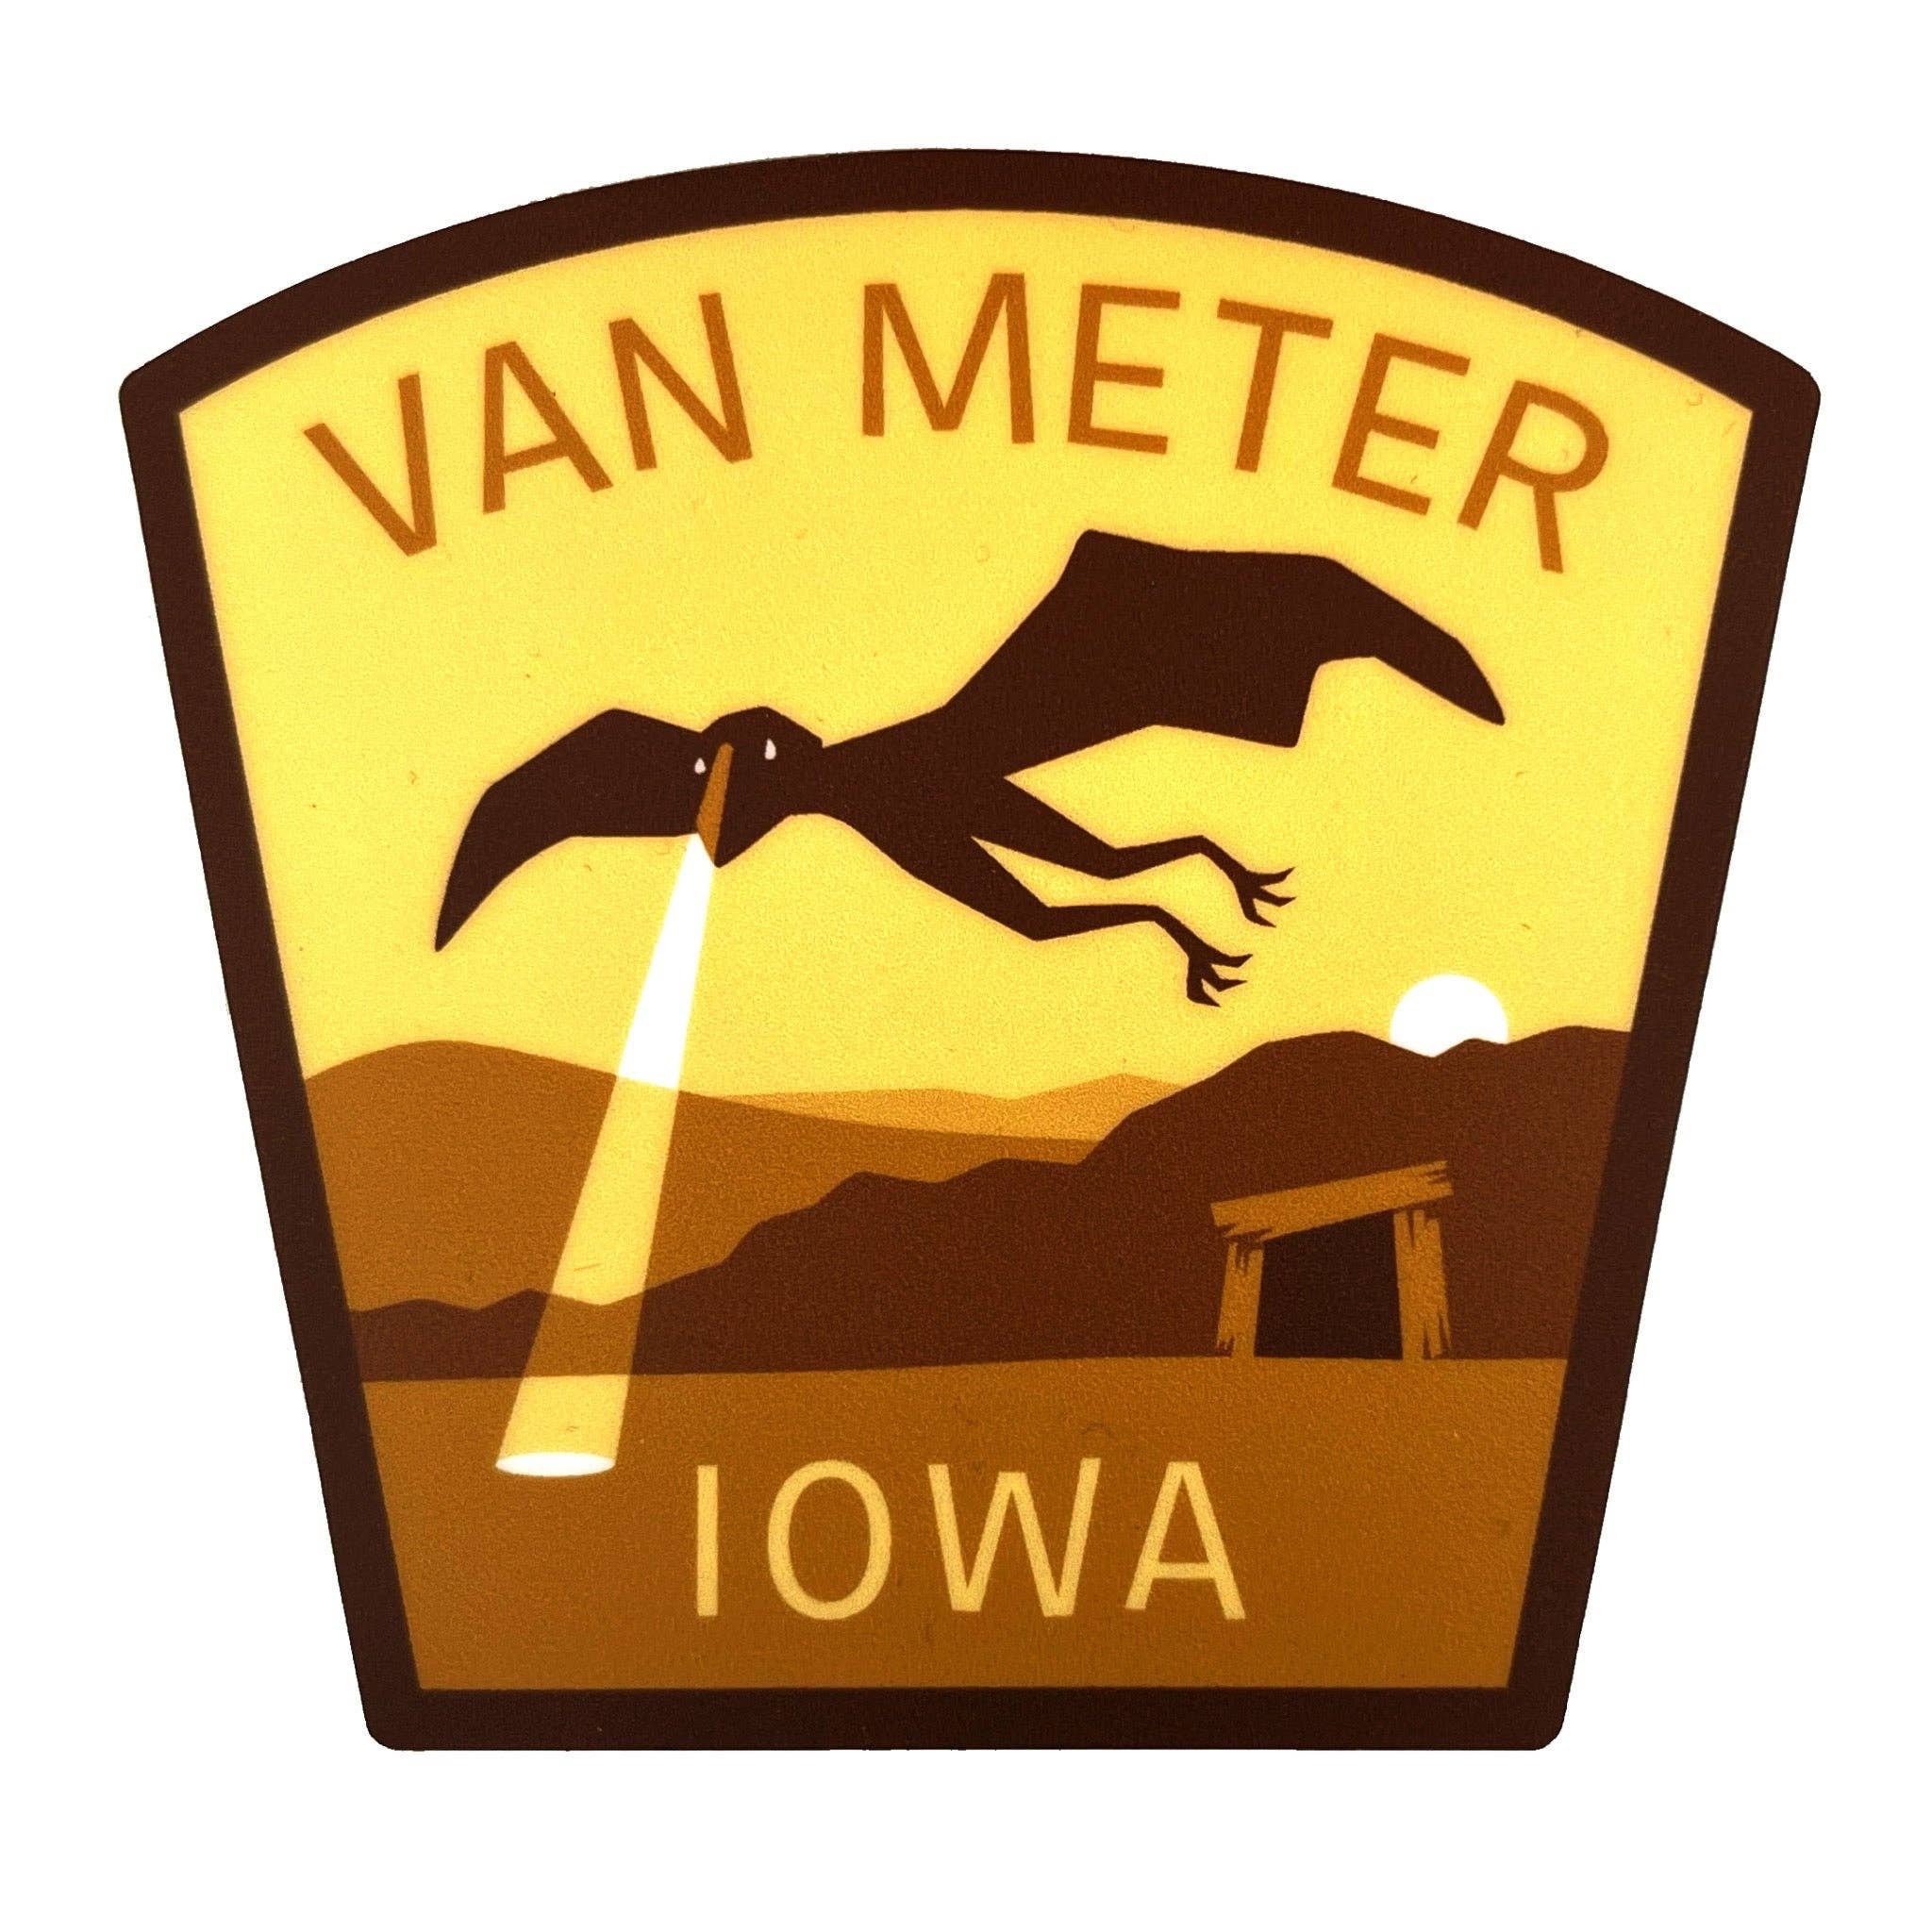 Van Meter, Iowa Travel Sticker